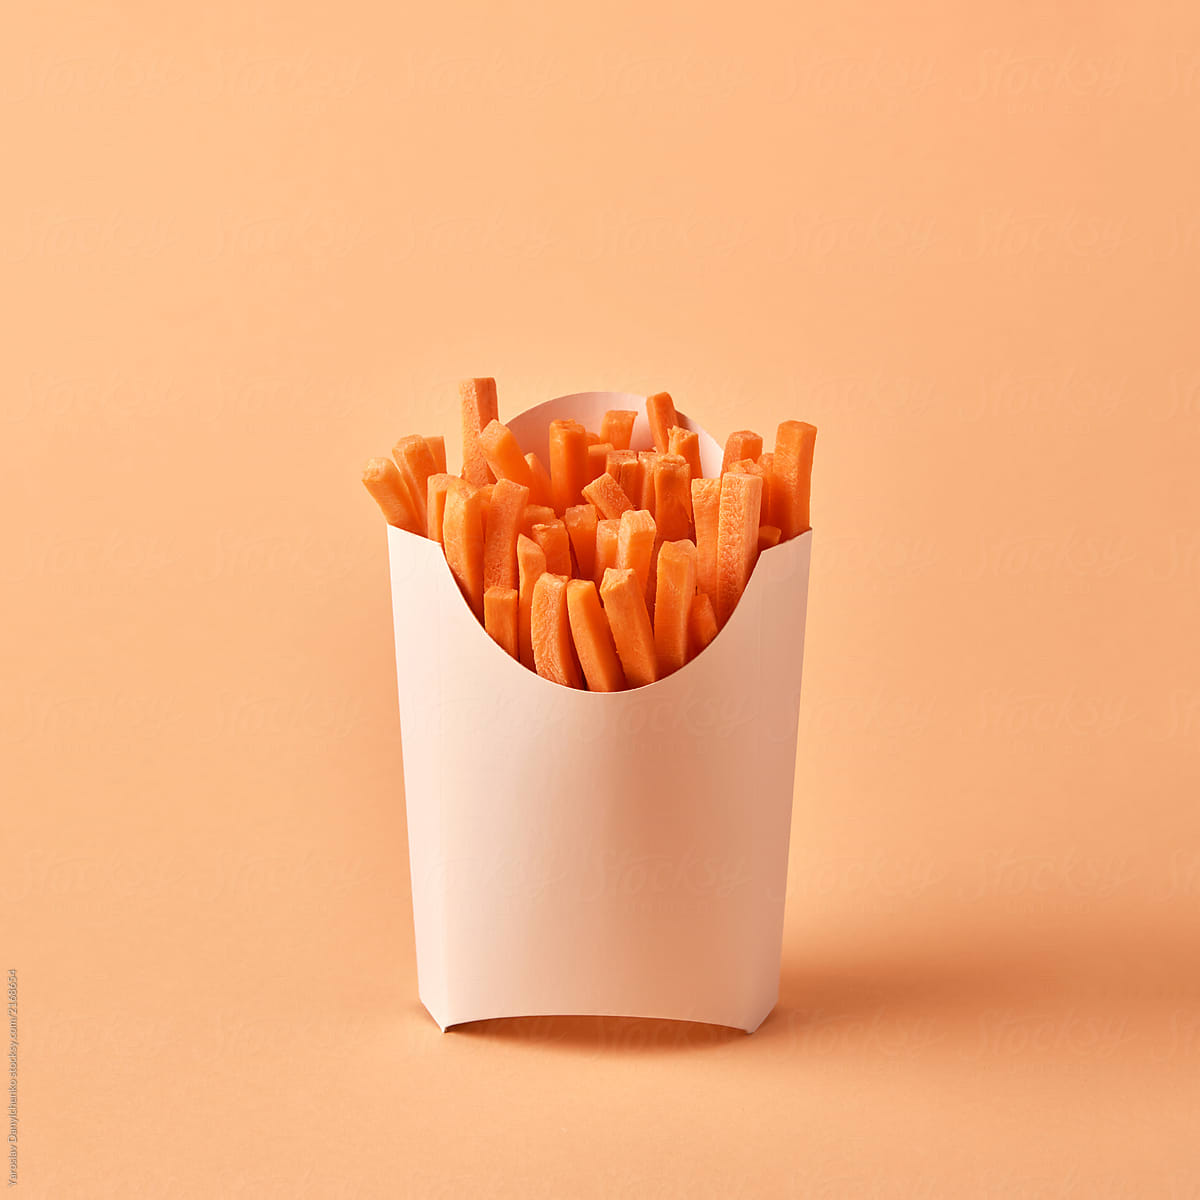 Natural fresh carrot sticks in a paper box on an orange paper ba